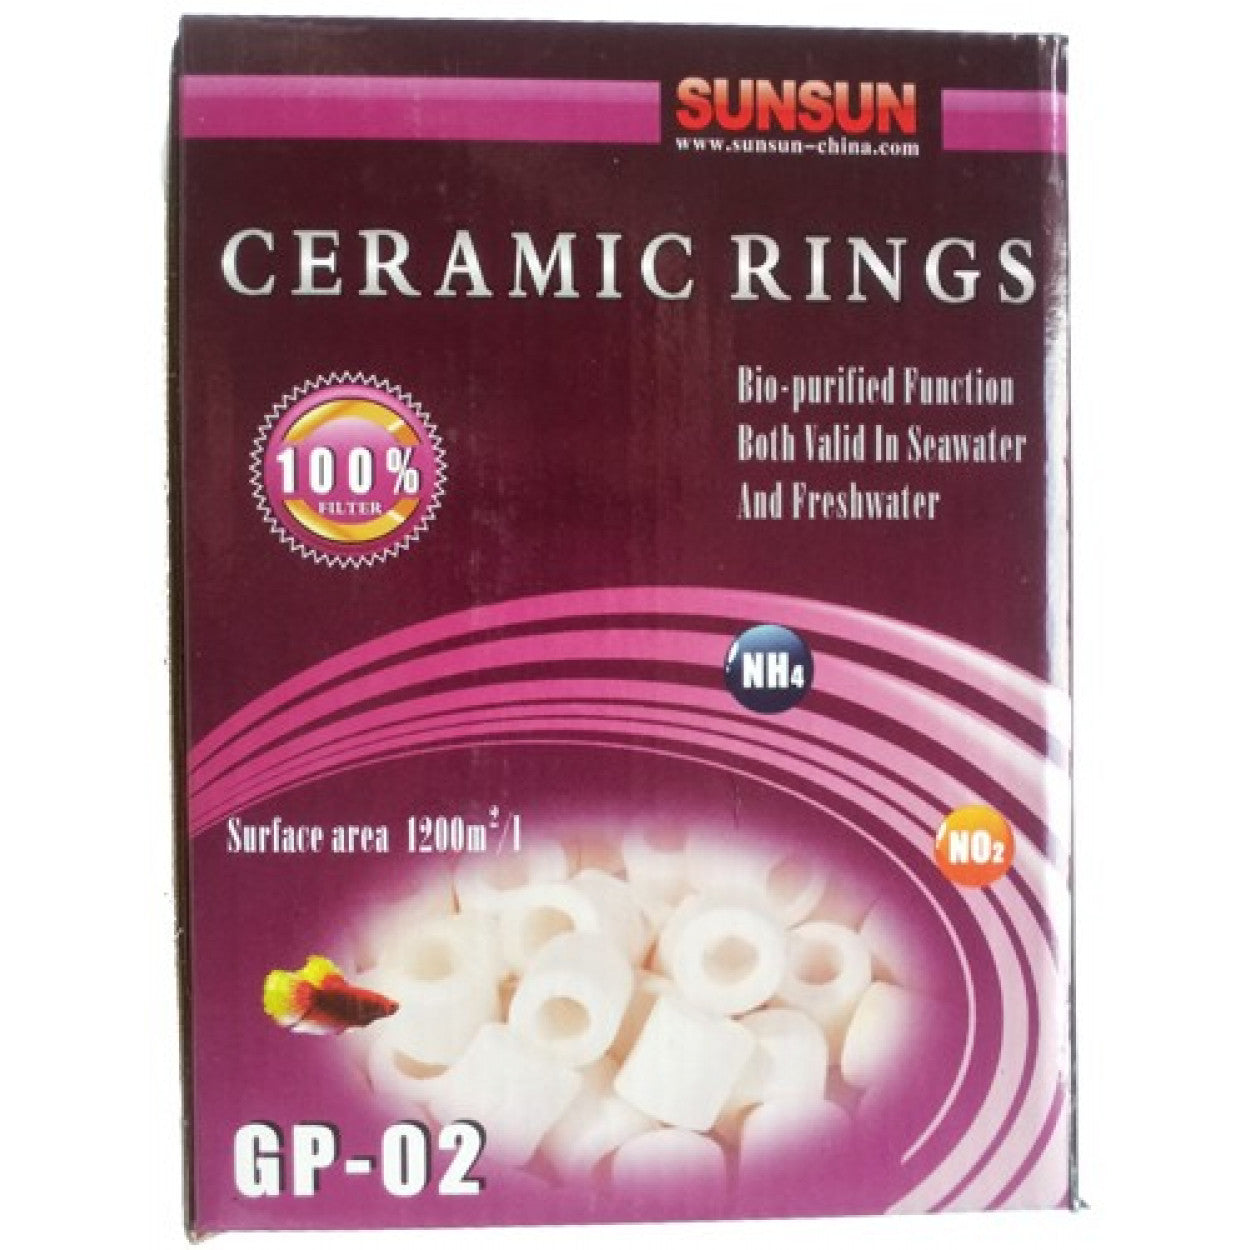 SunSun Ceramic Rings 1000ml